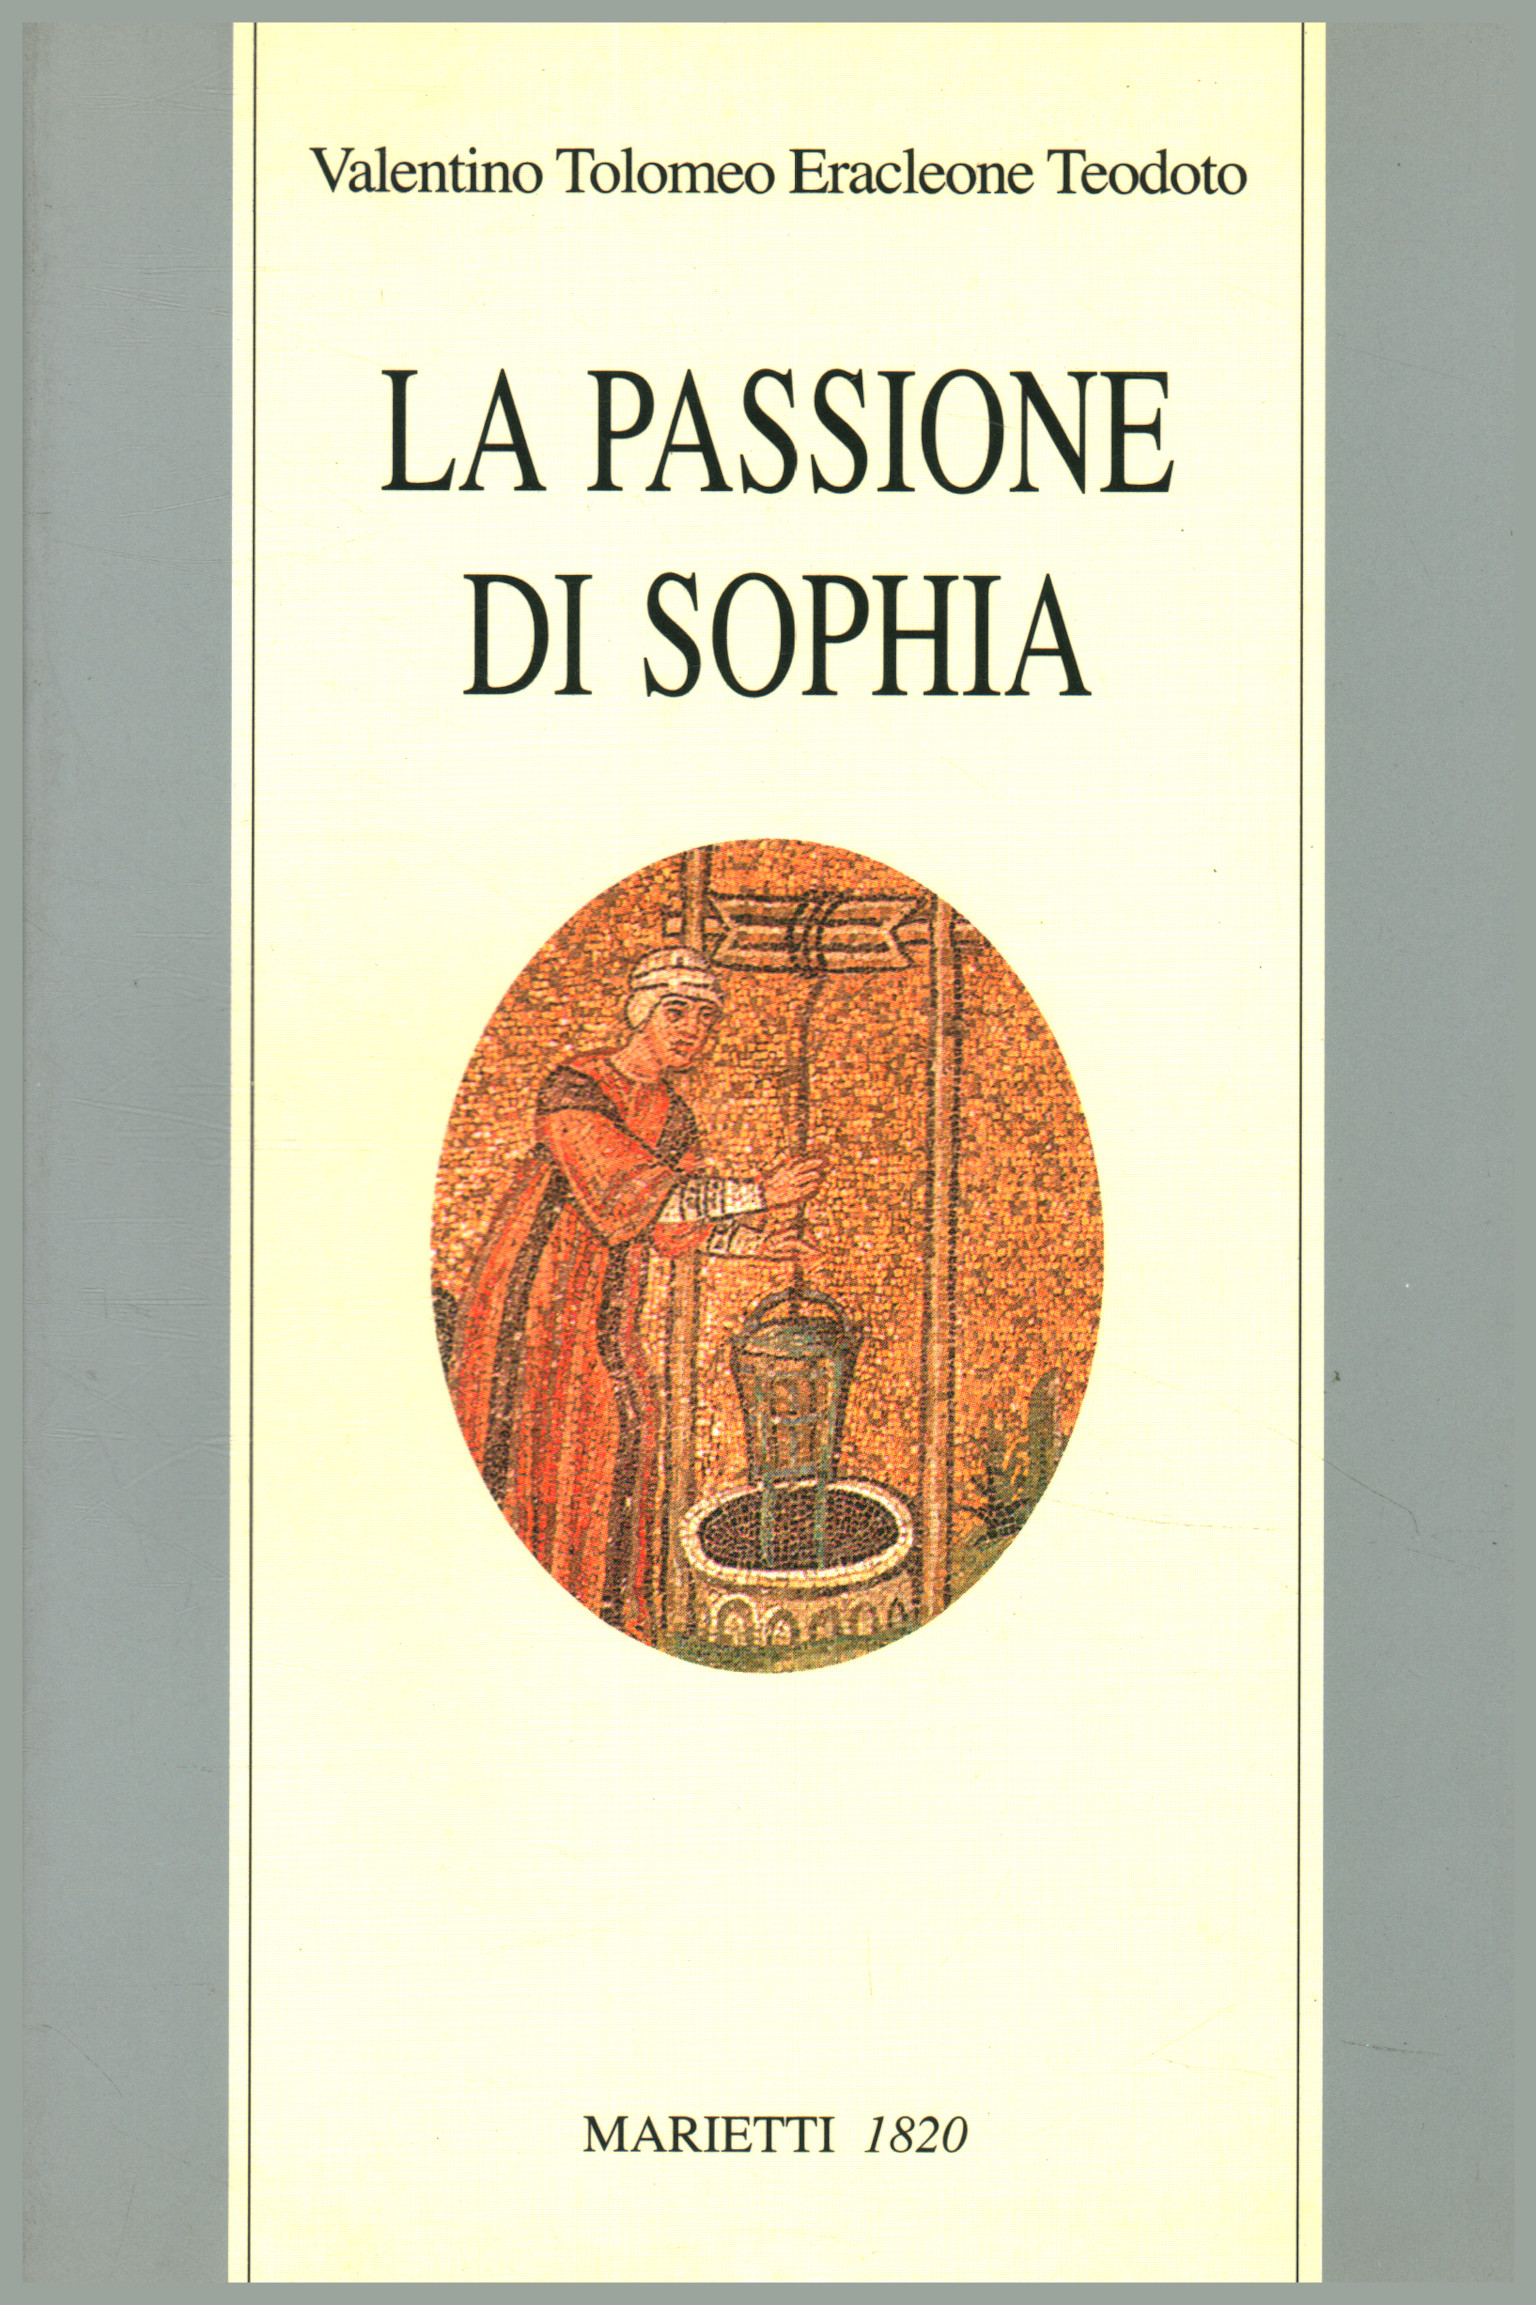 Sophia's passion